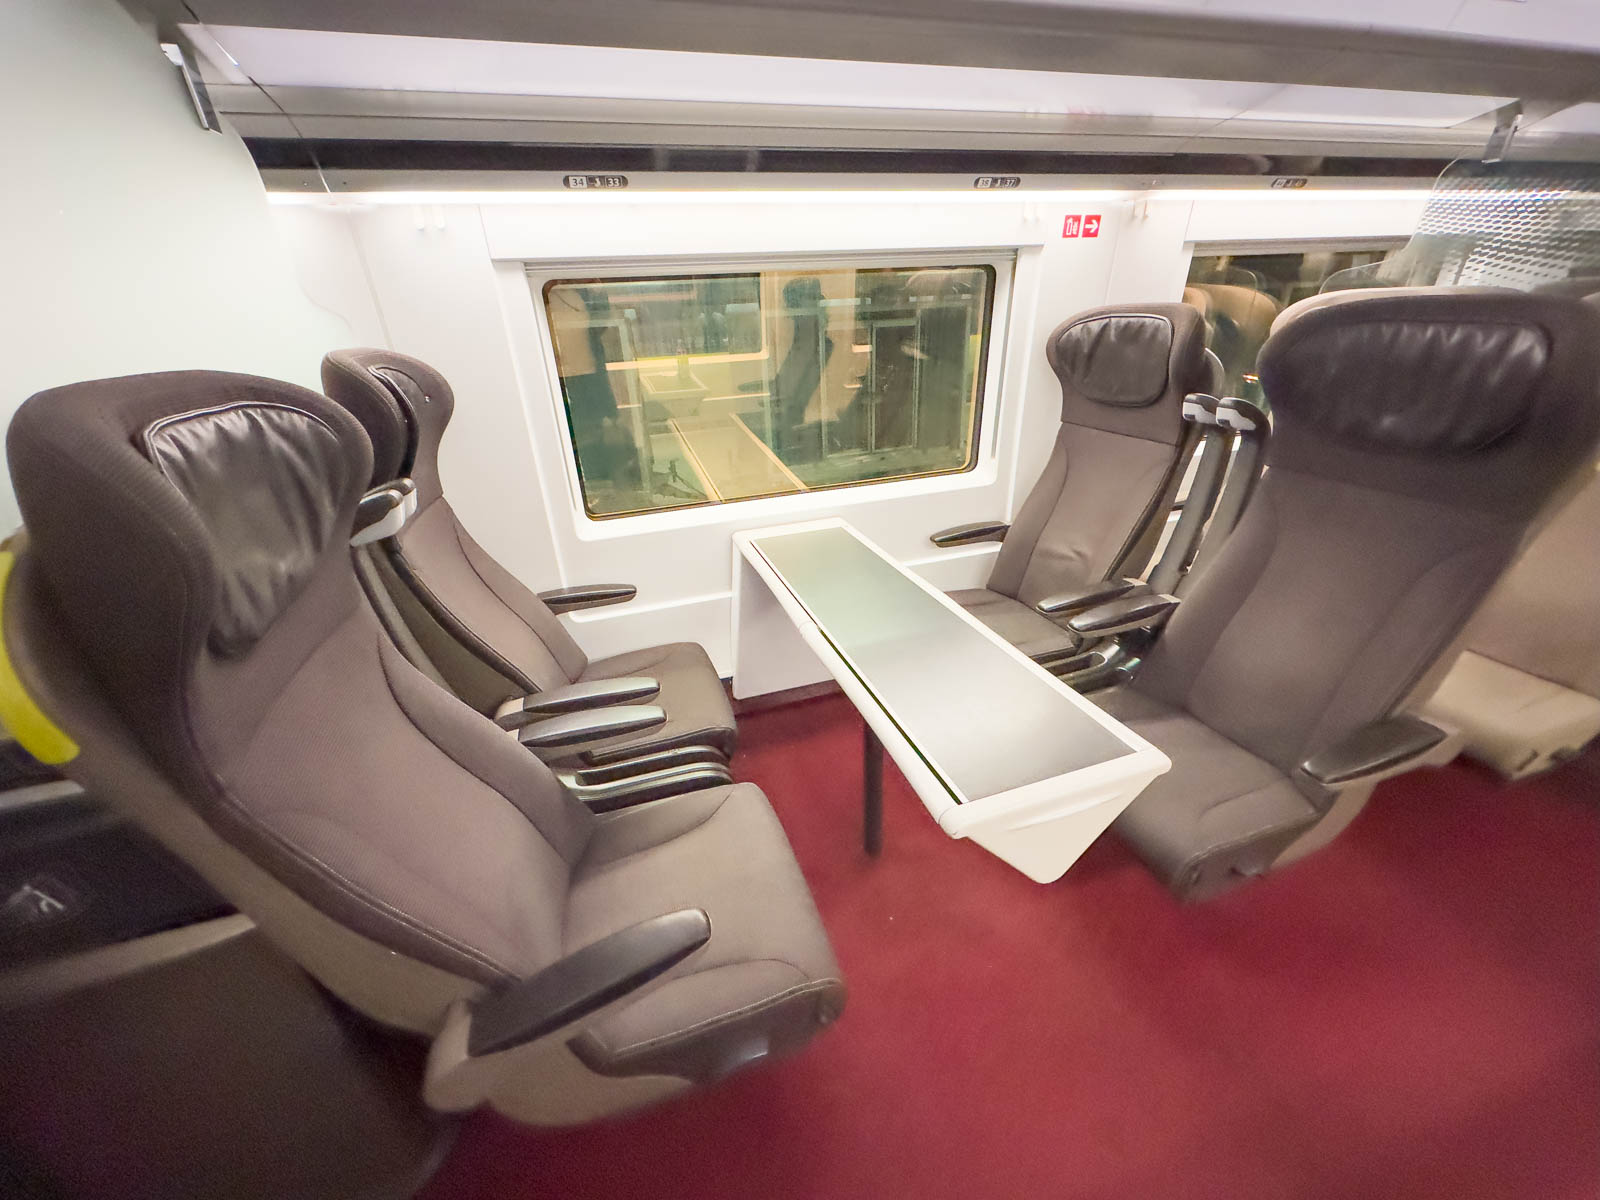 Standard Premier Seats on the Eurostar Train from London to Paris